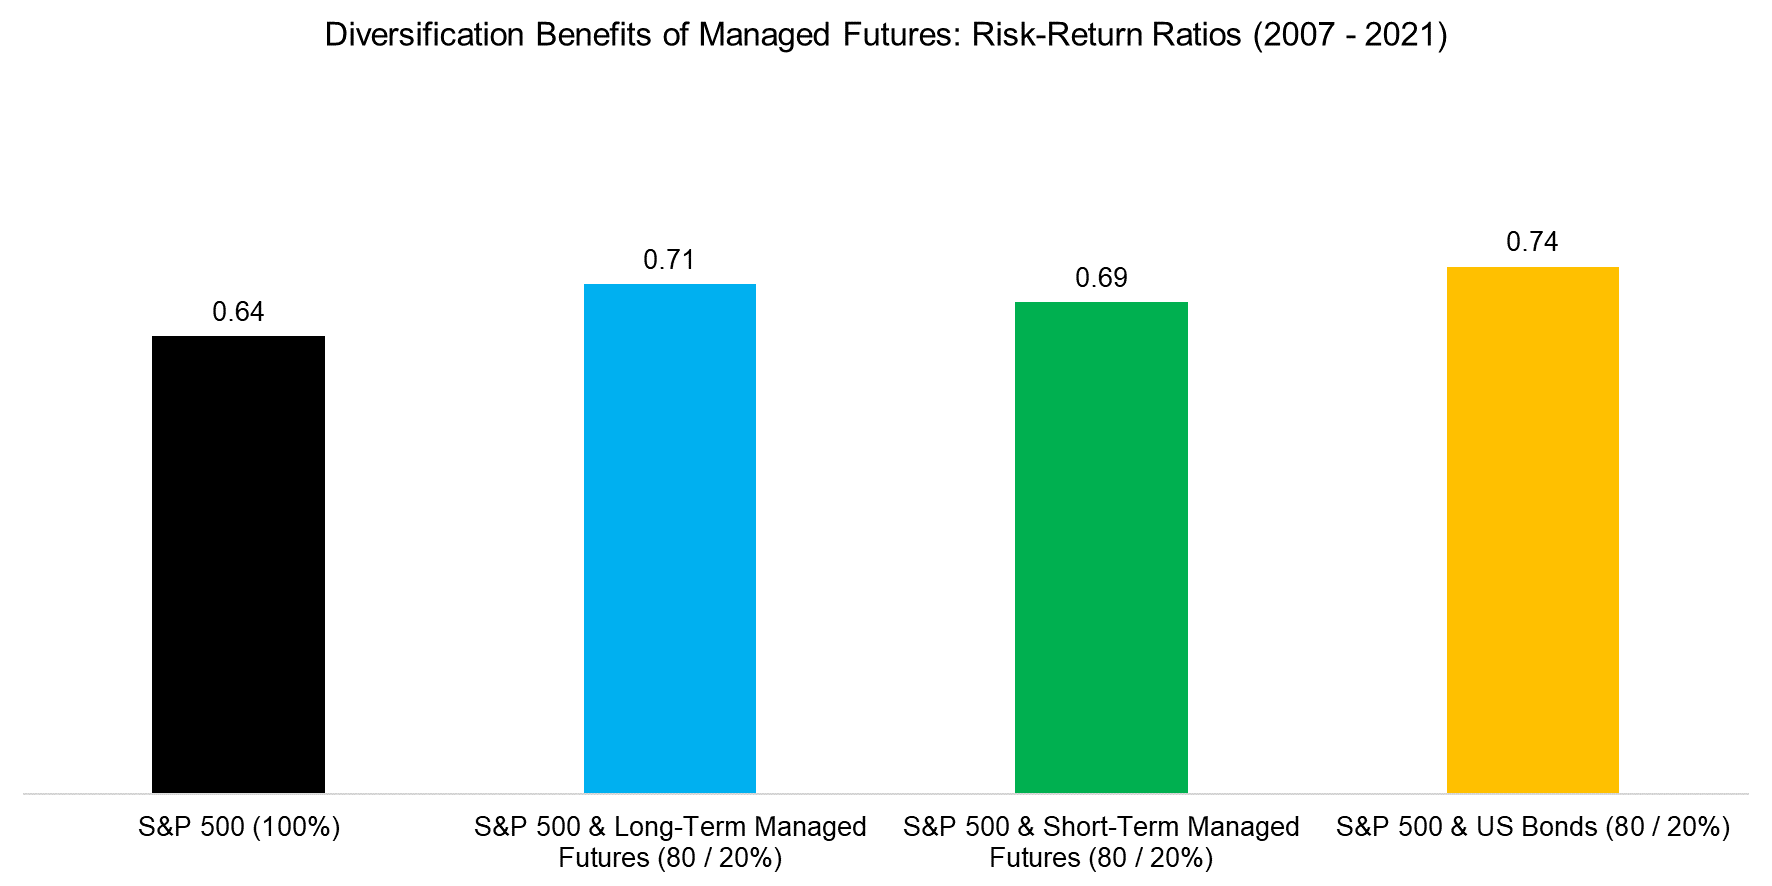 Diversification Benefits of Managed Futures Risk-Return Ratios (2007 - 2021)